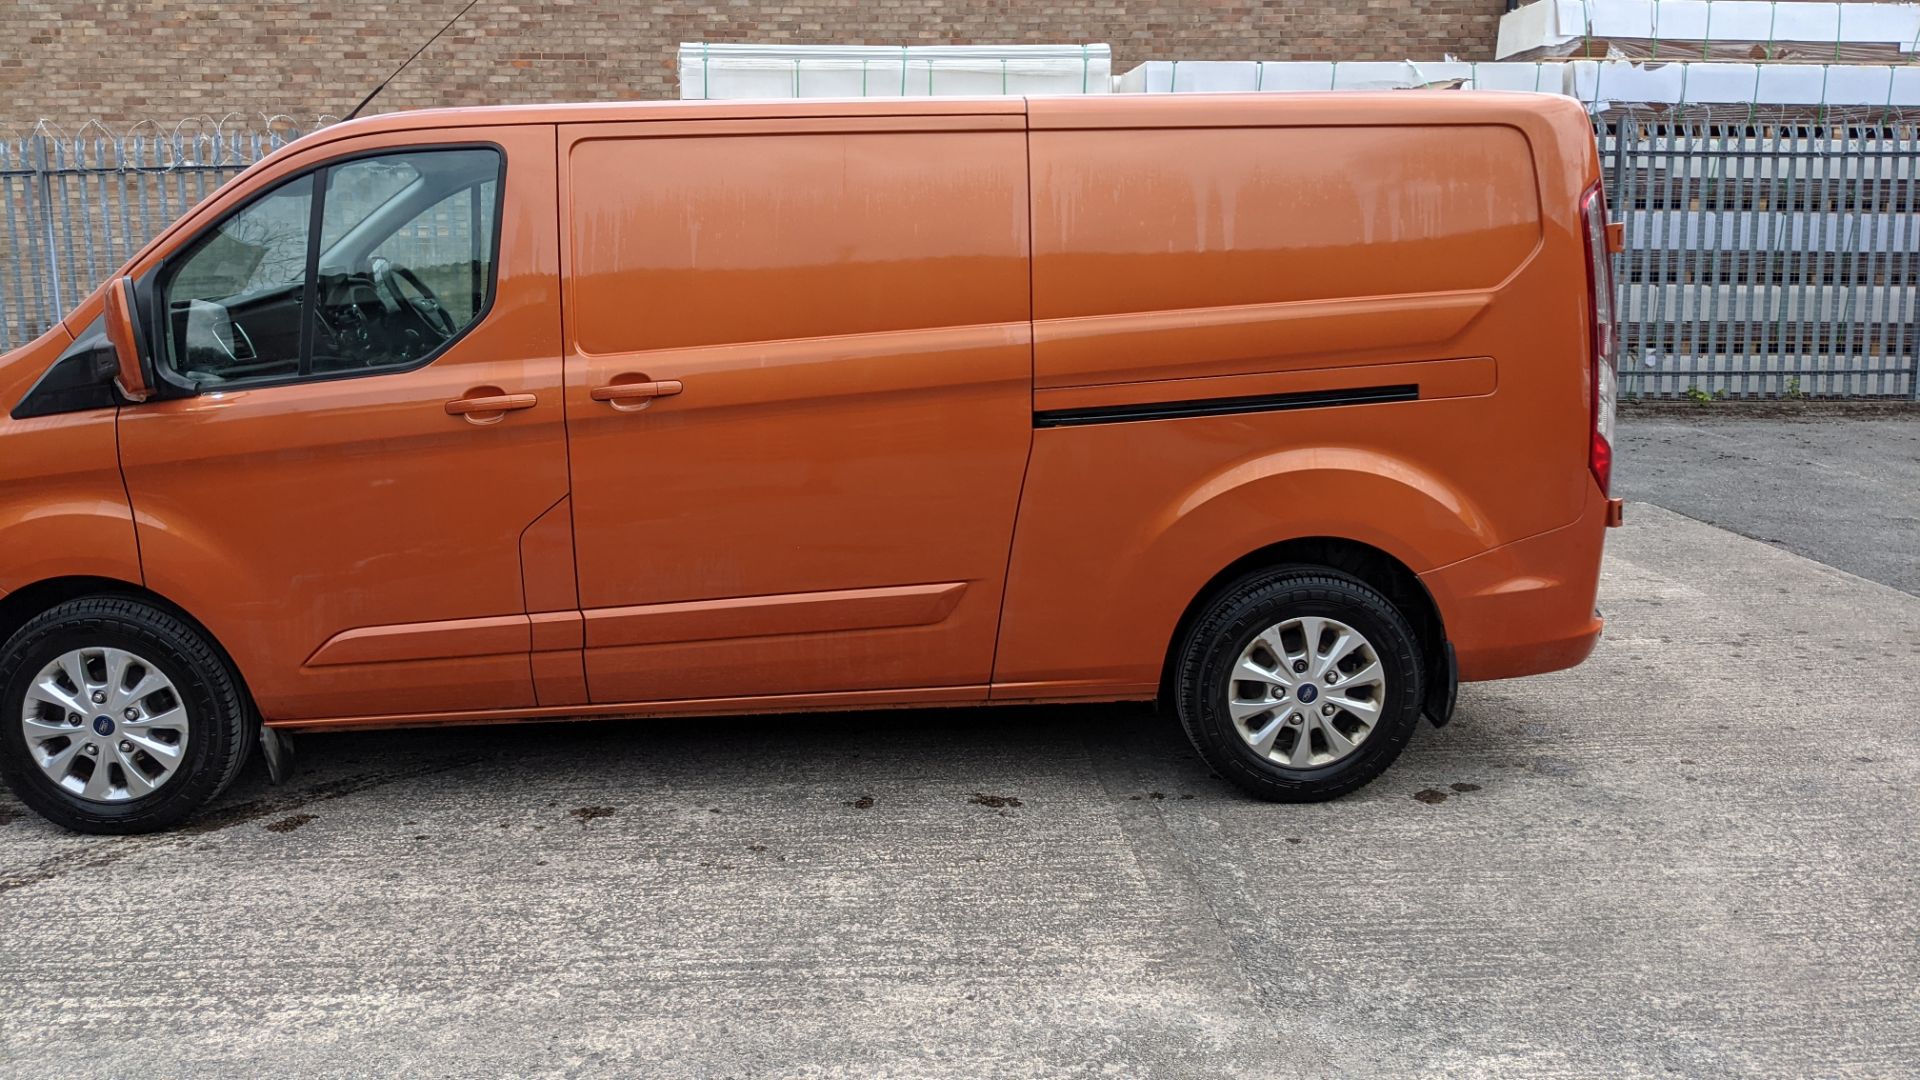 2019 Ford Transit Custom 300 L2 van, Orange Glow. High spec: Heated seats, air con, parking sensors - Image 12 of 66